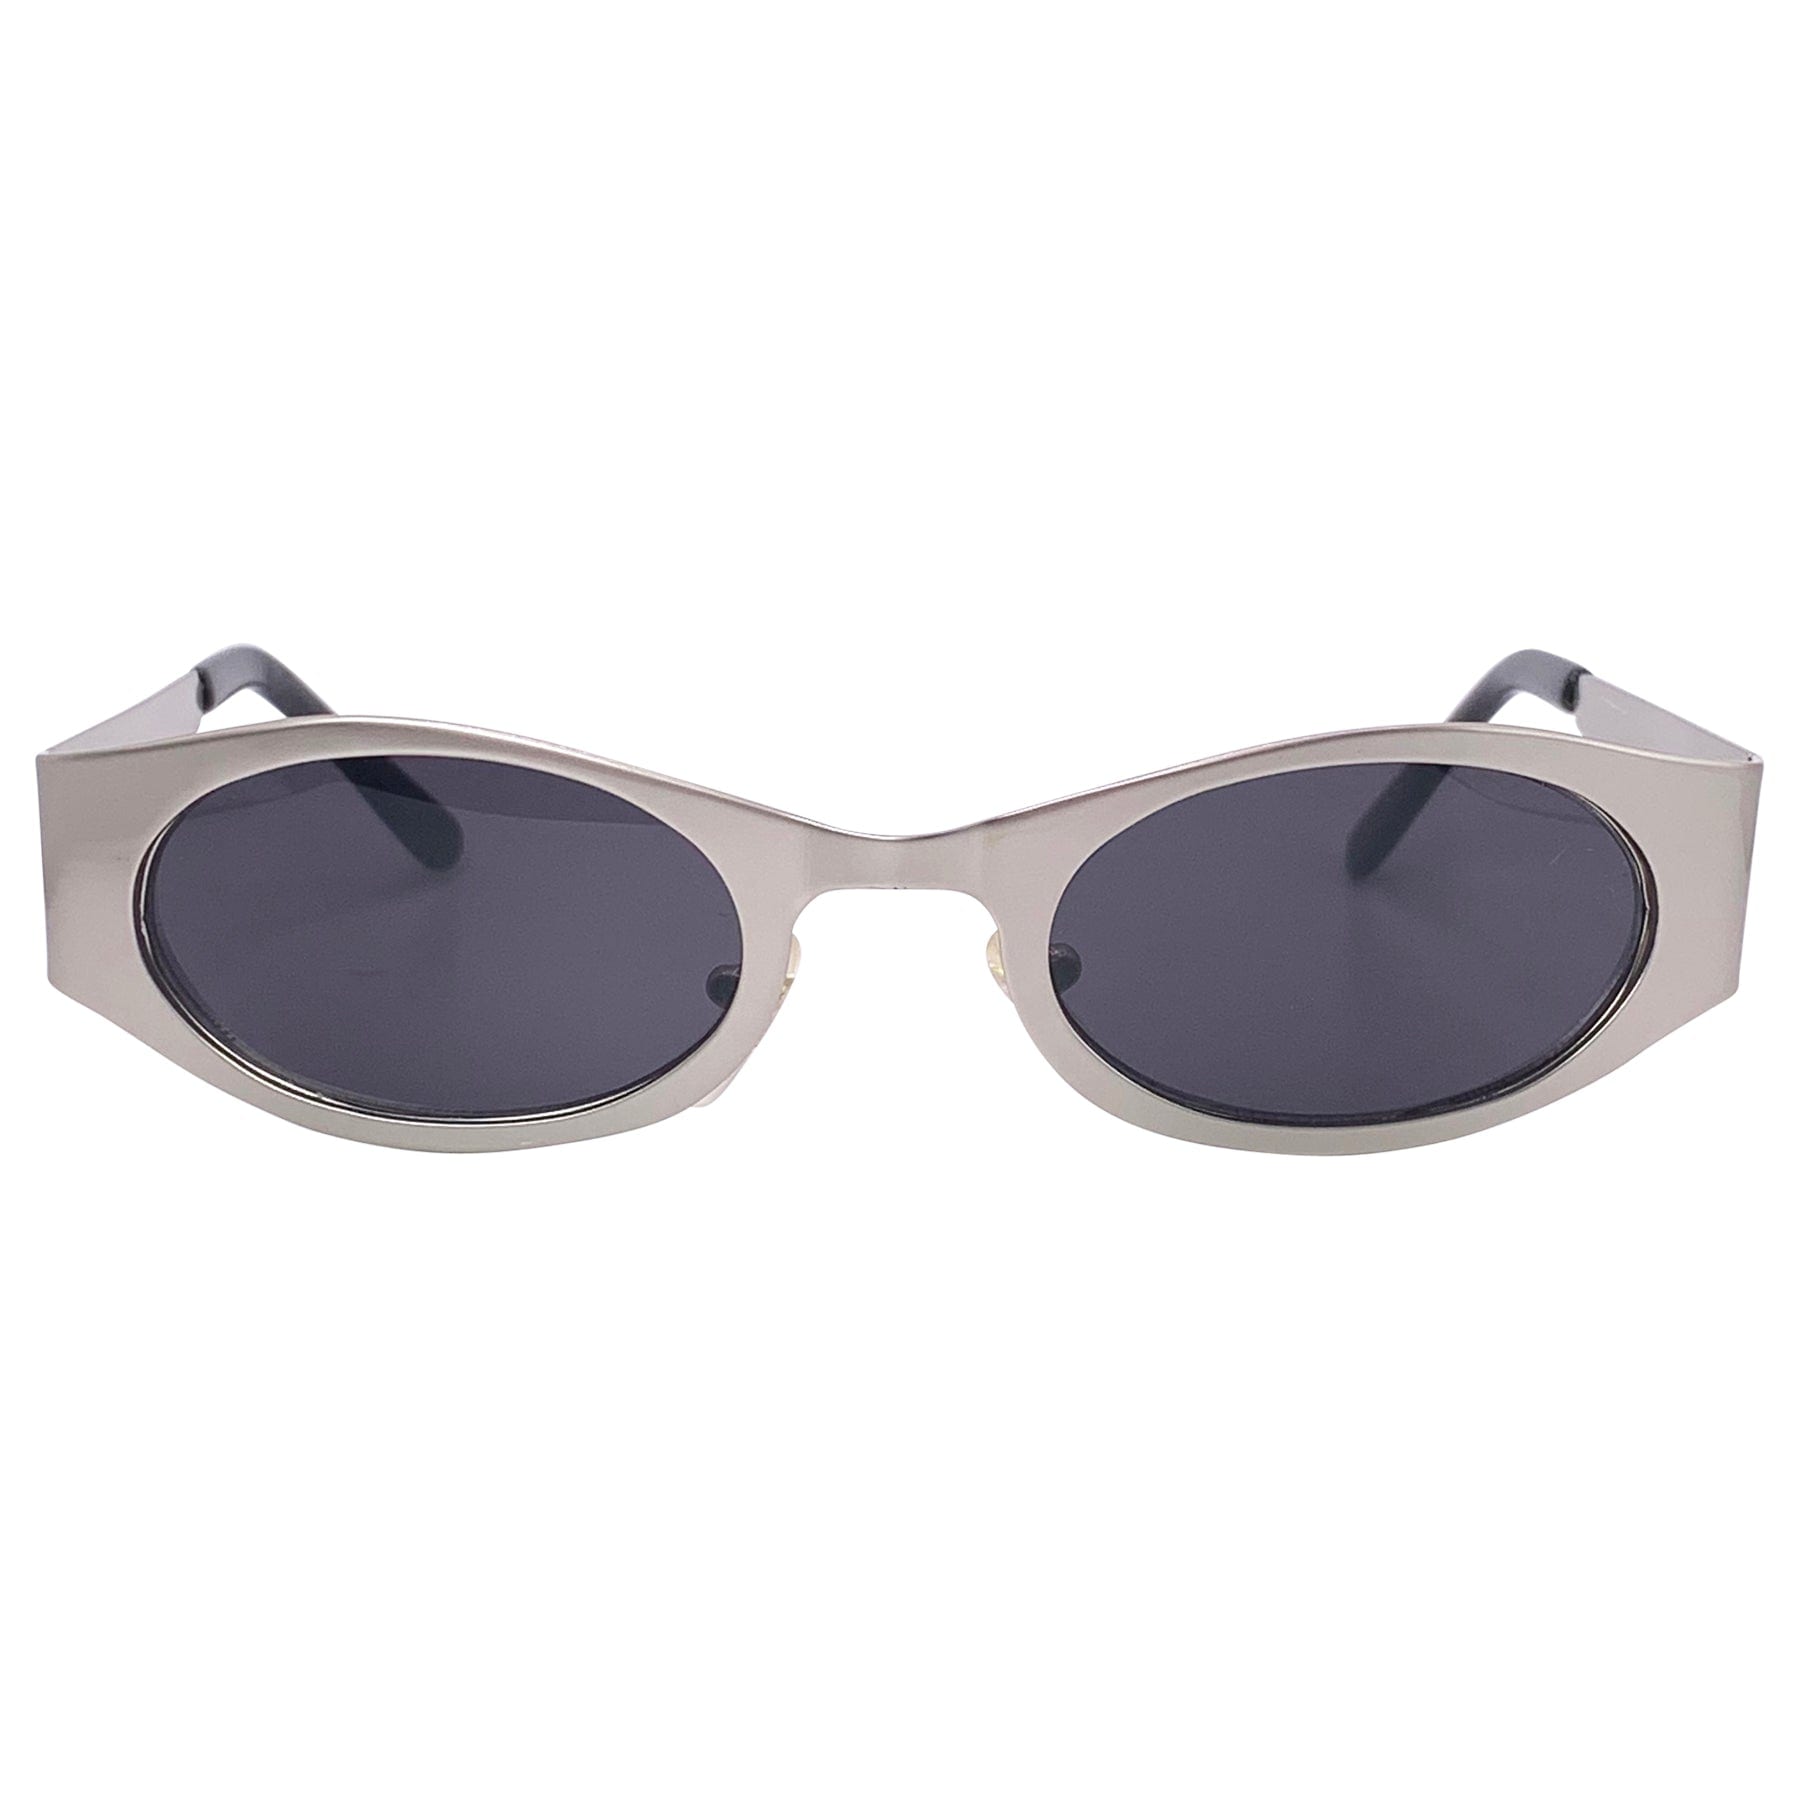 90s retro sunglasses with a silver metal frame and super dark lens